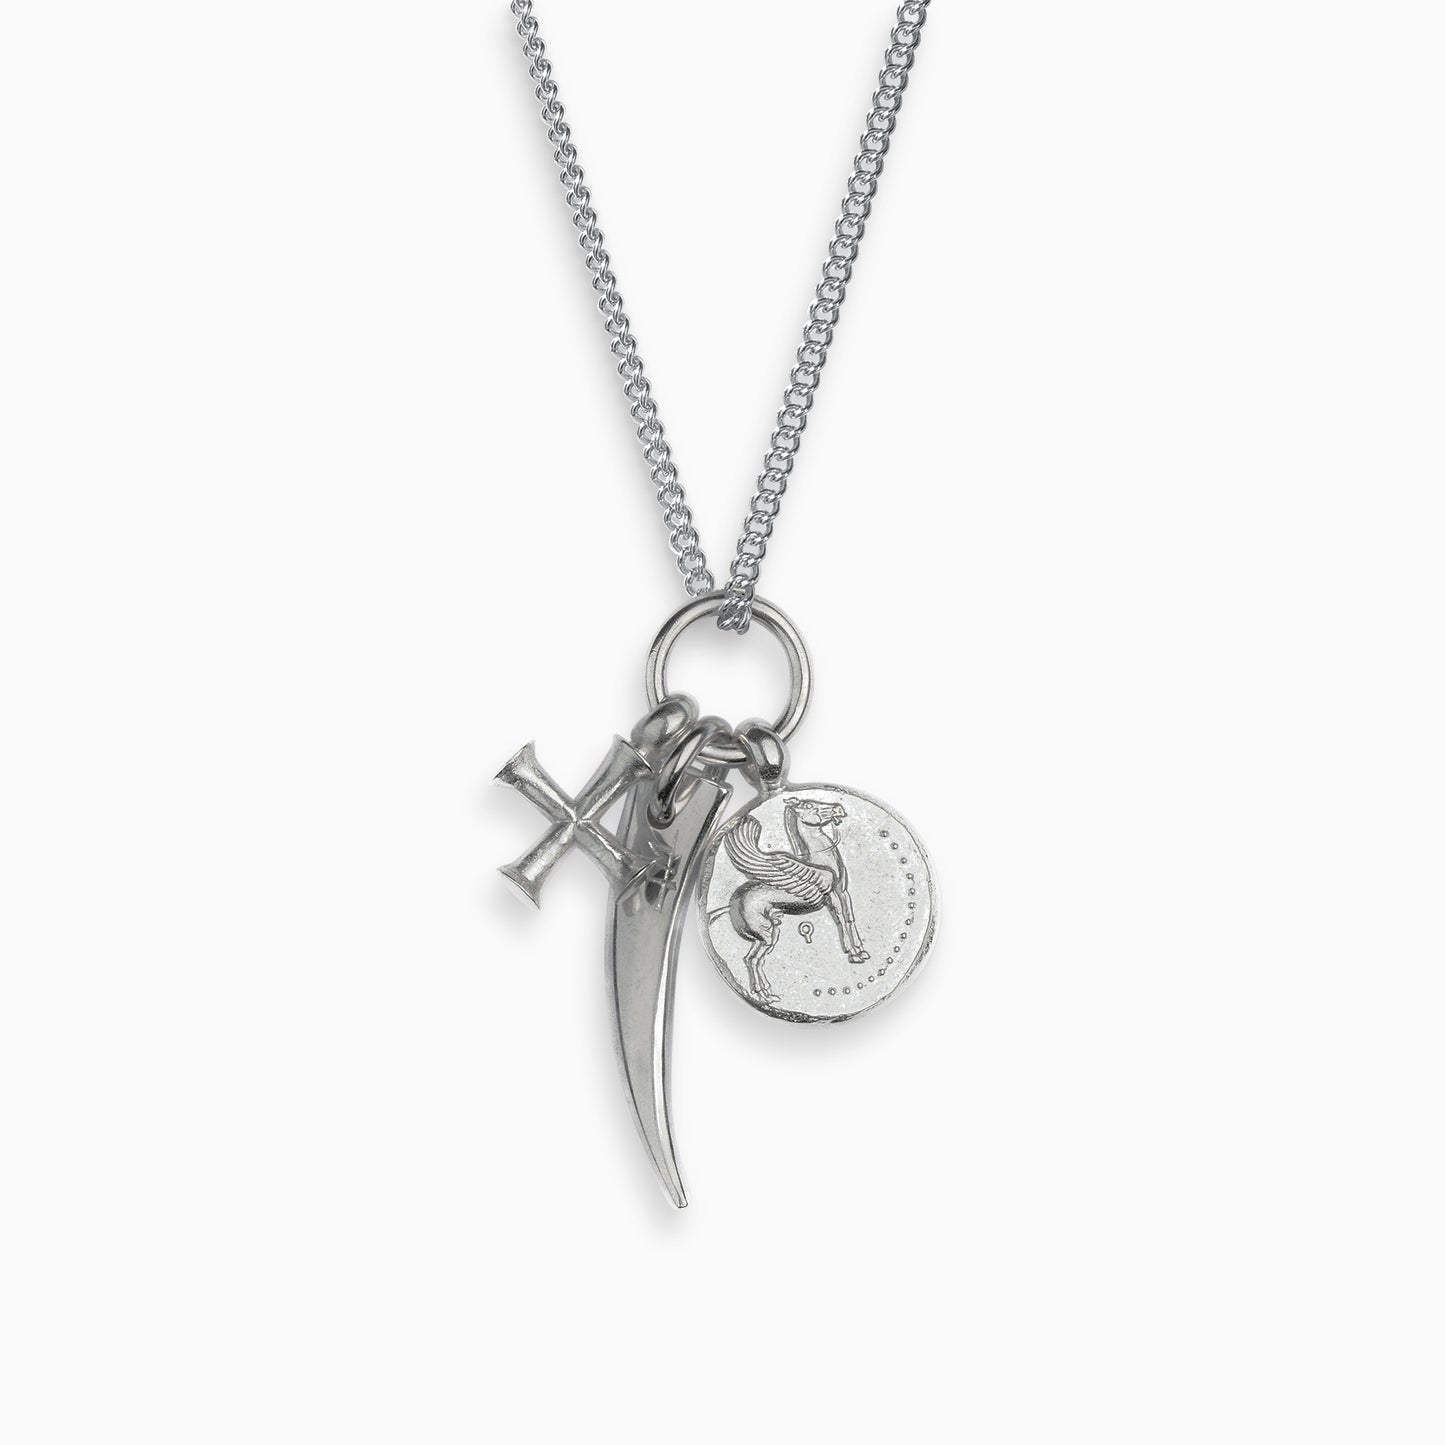 Pegasus, Byzantine cross and Congo necklace